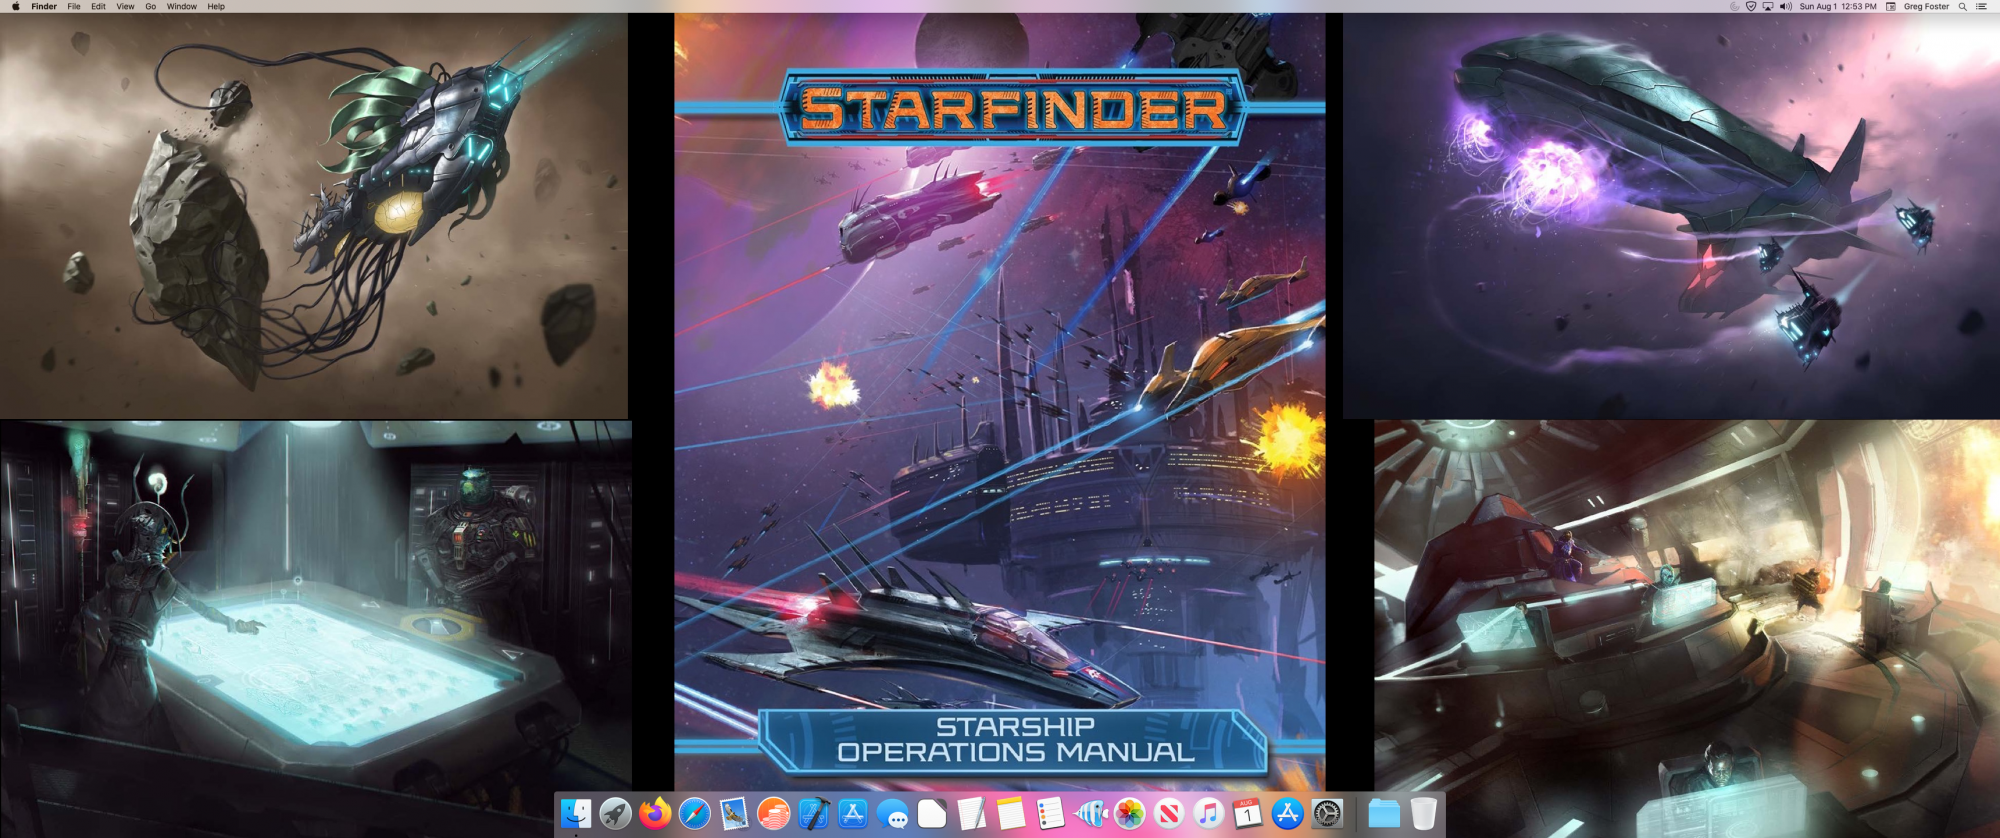 Mac Pro desktop - Starship Operations Manual.png